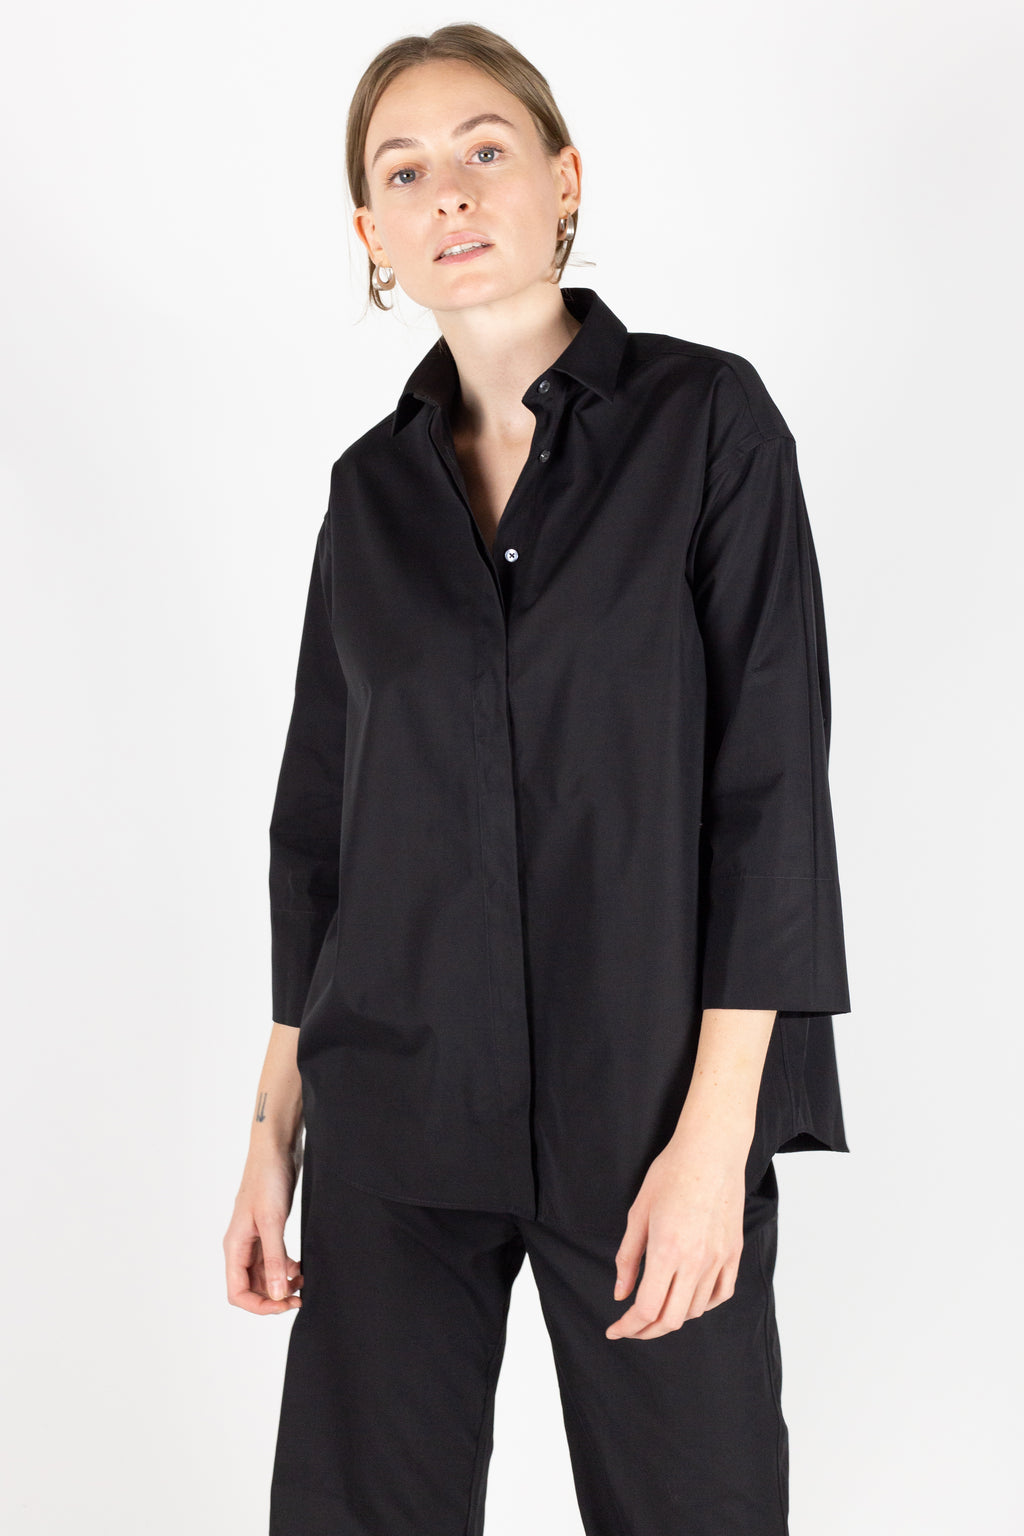 Black loose cotton poplin shirt. ¾ length sleeves.